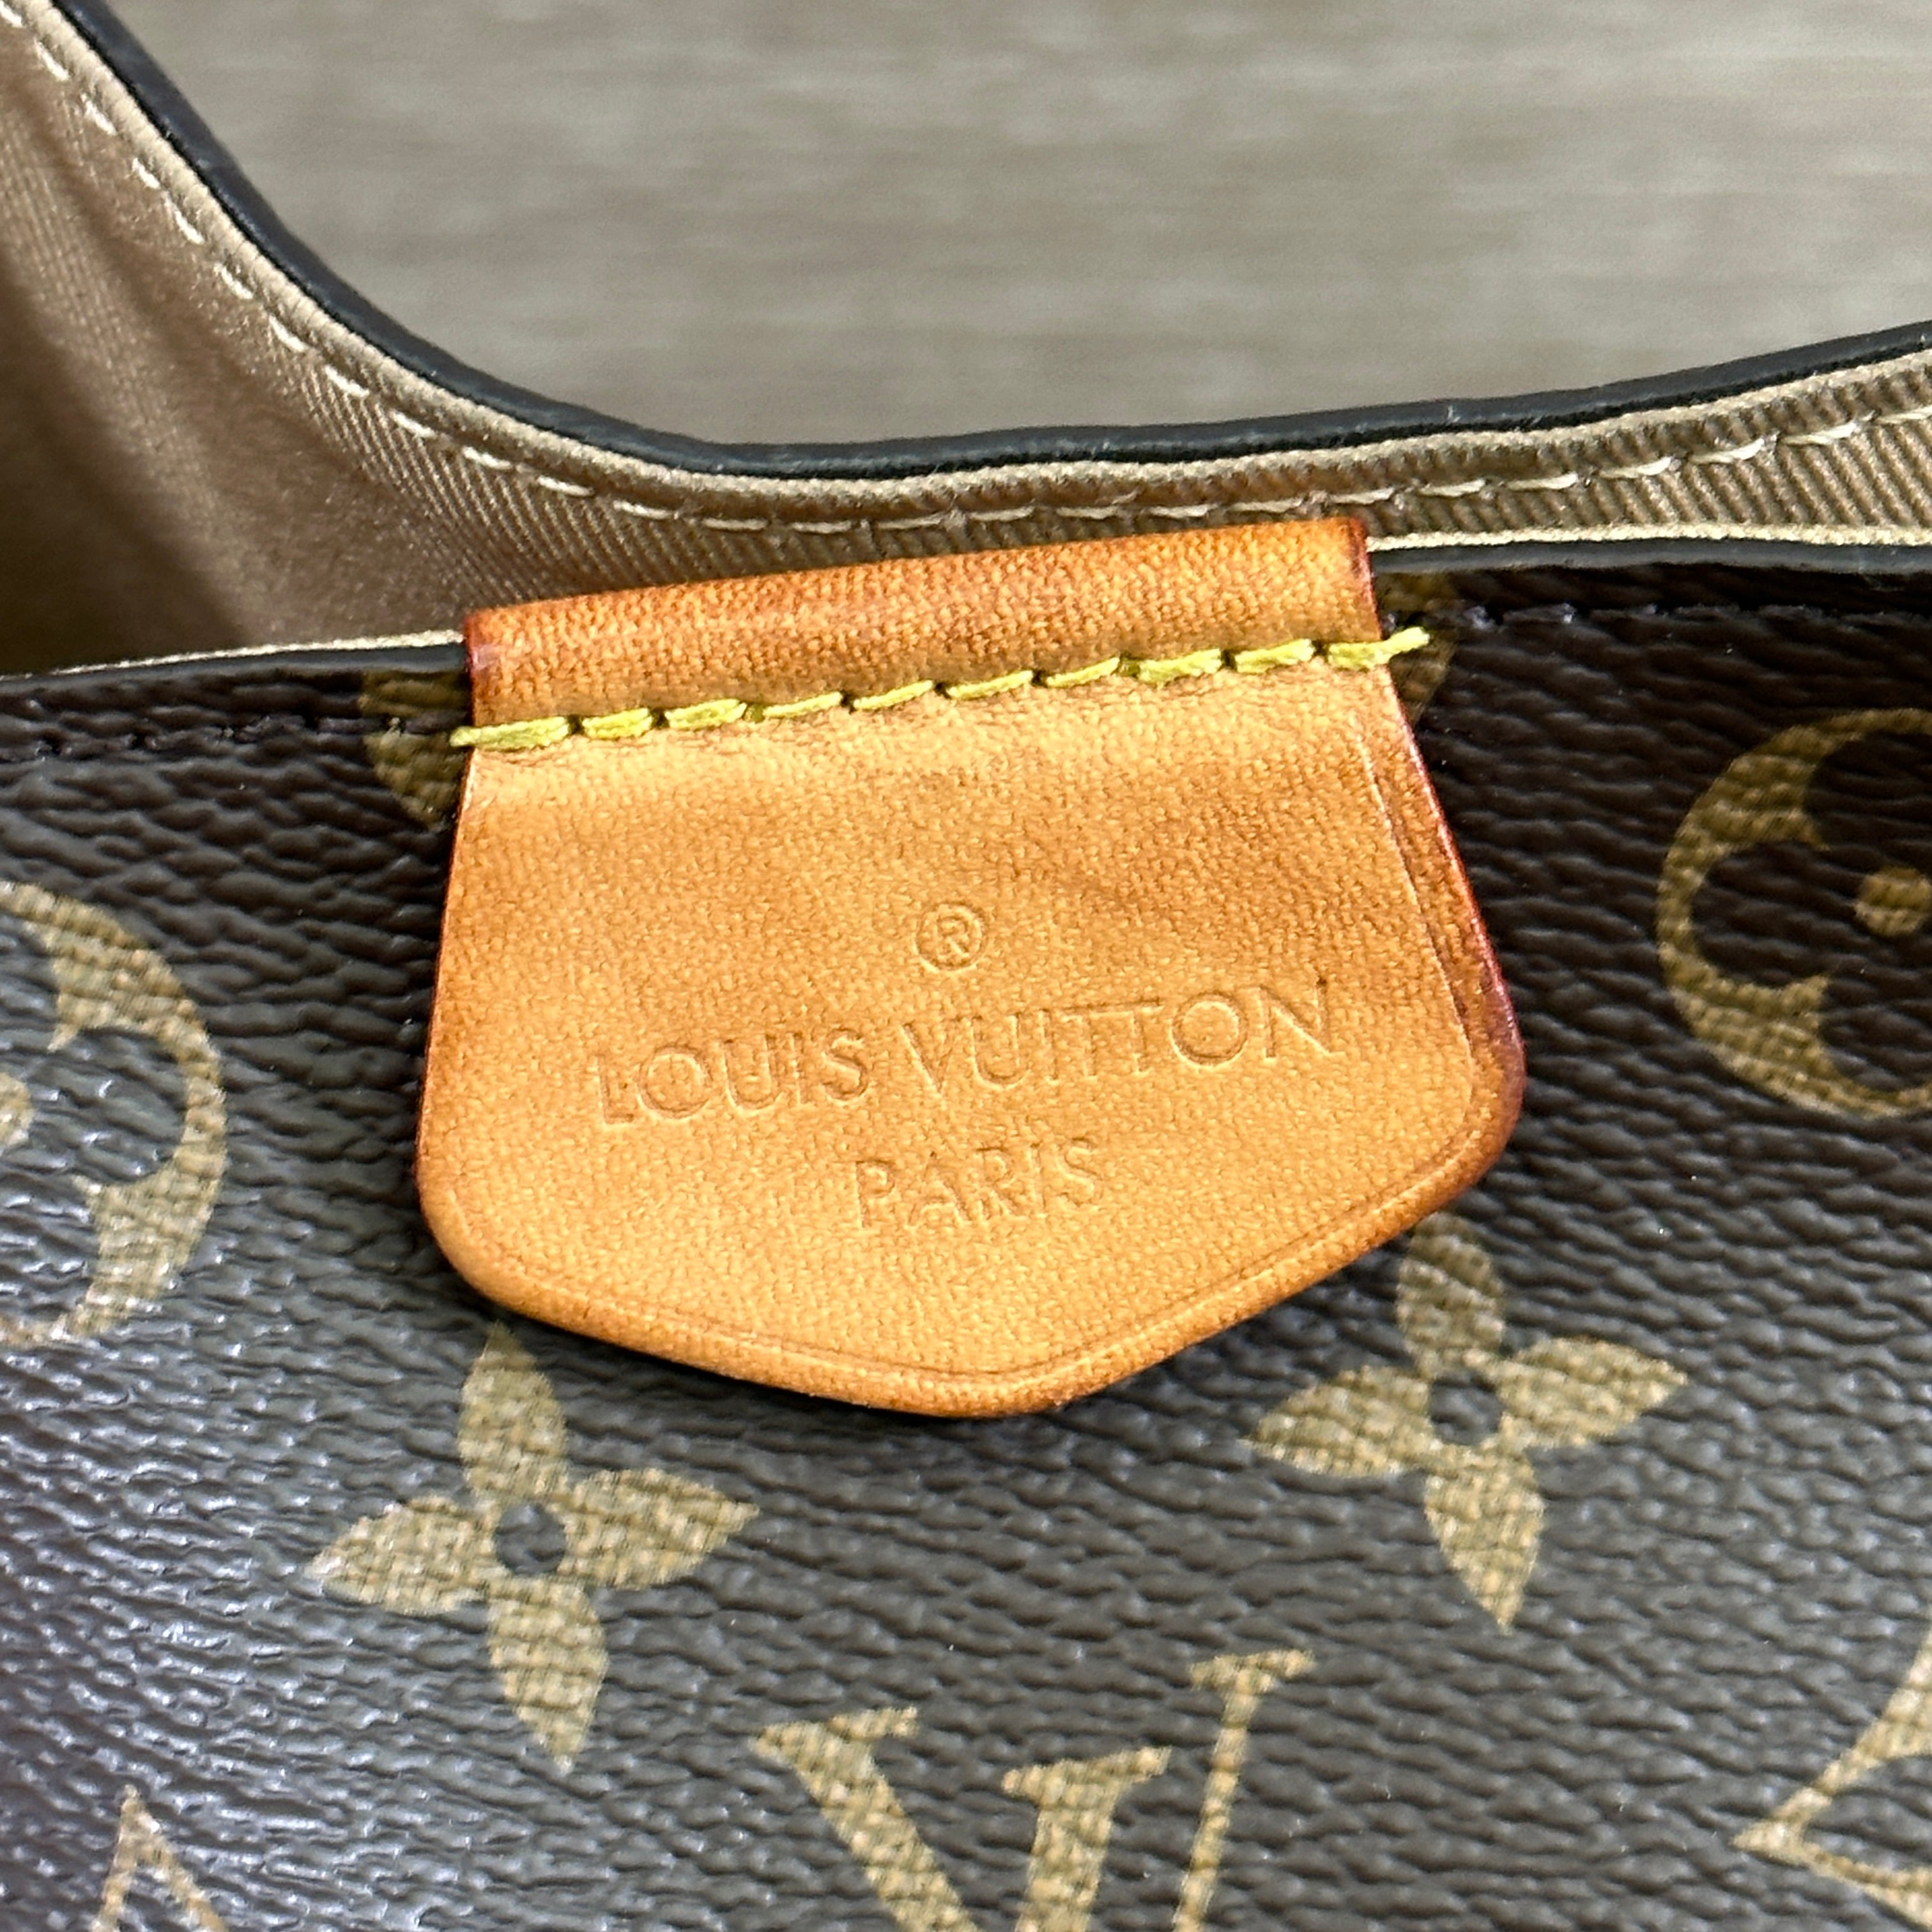 Louis Vuitton Delightful Vs Graceful 